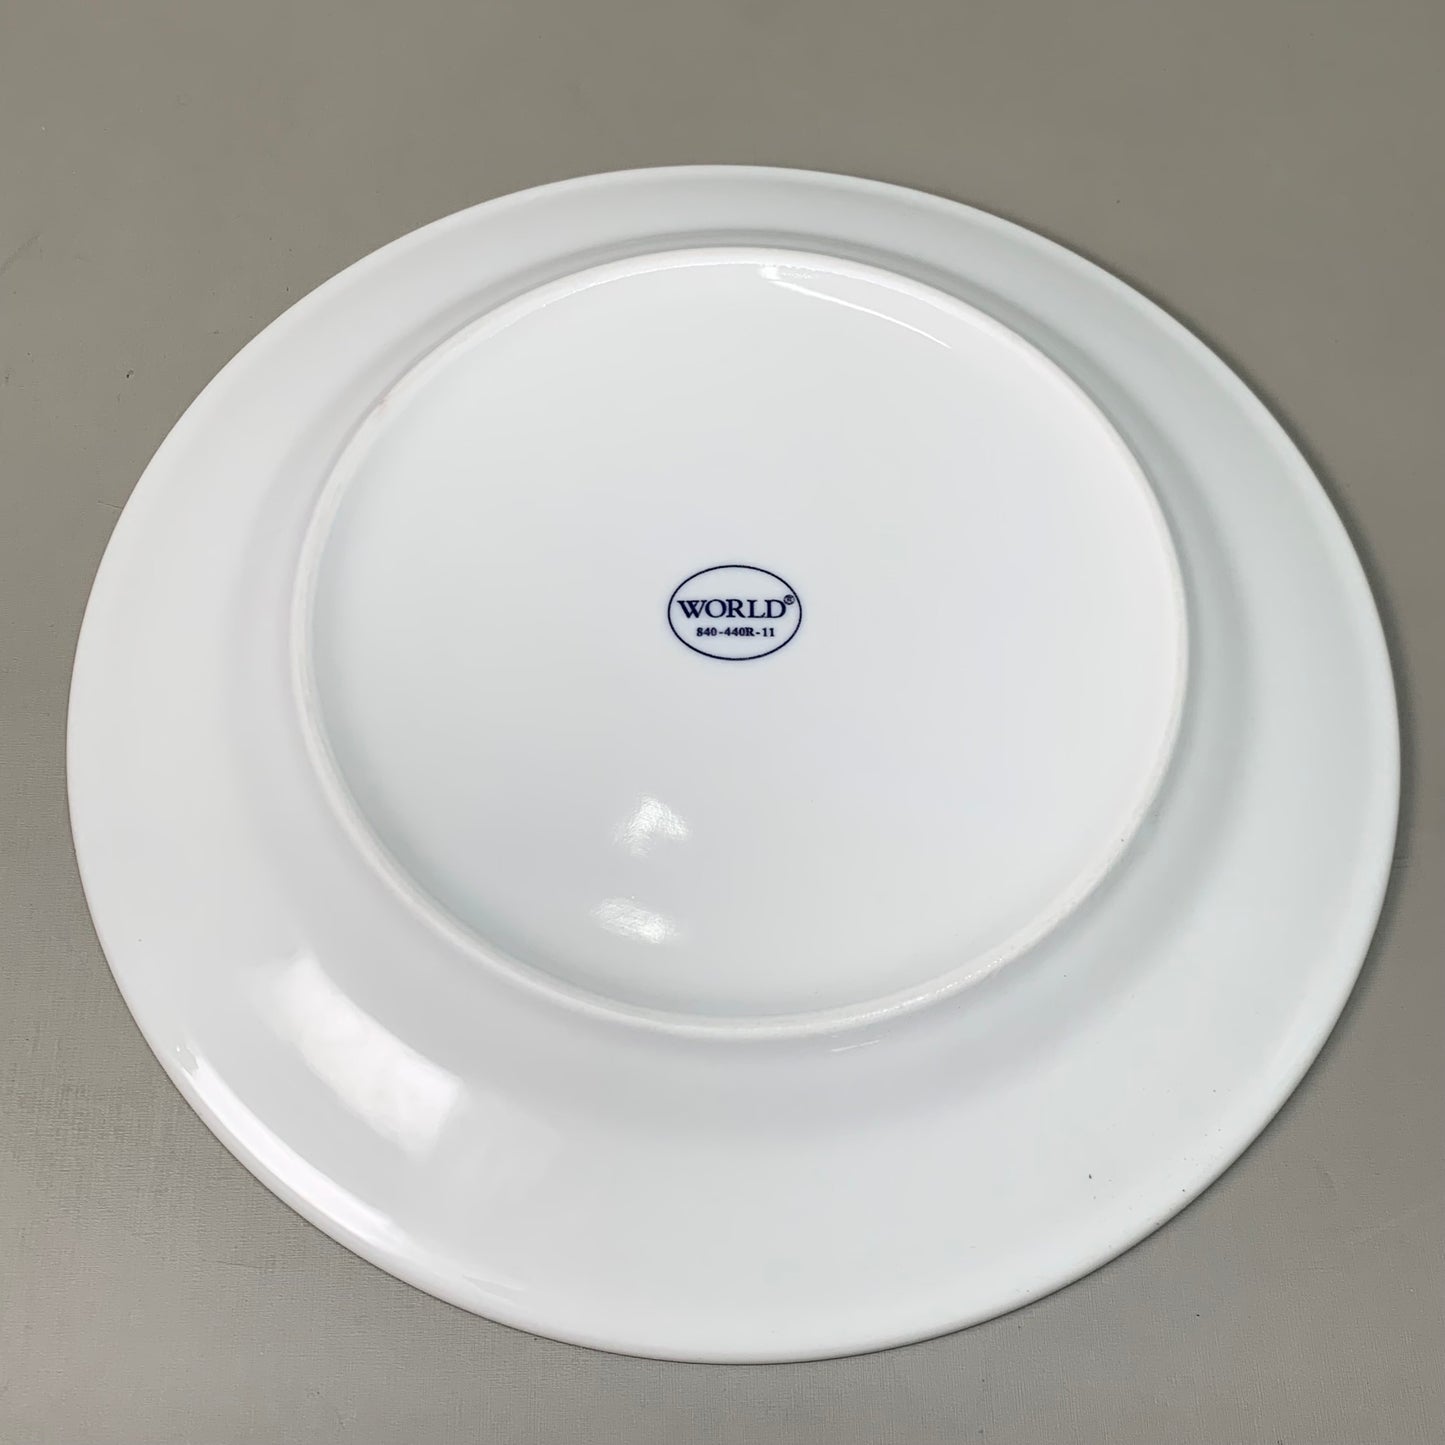 WORLD TABLEWARE (1 DOZEN) Porcelain 11" Wide Rim Plate White 840-440R-11